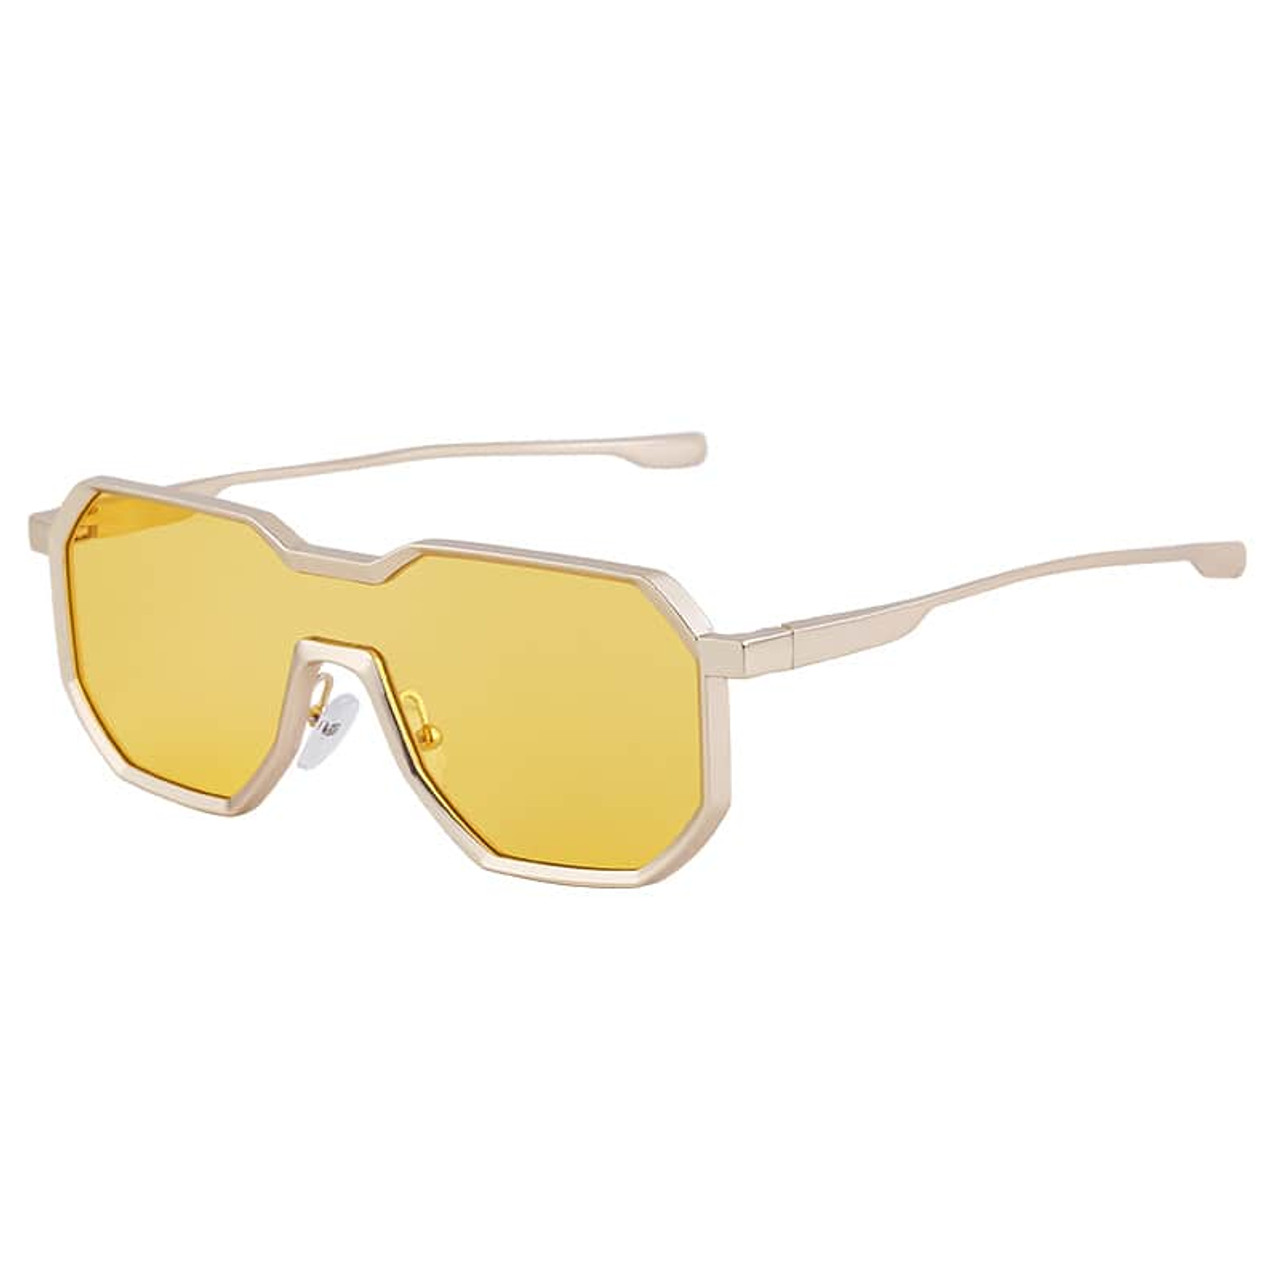 Retro Men's Sunglasses Cool One-piece